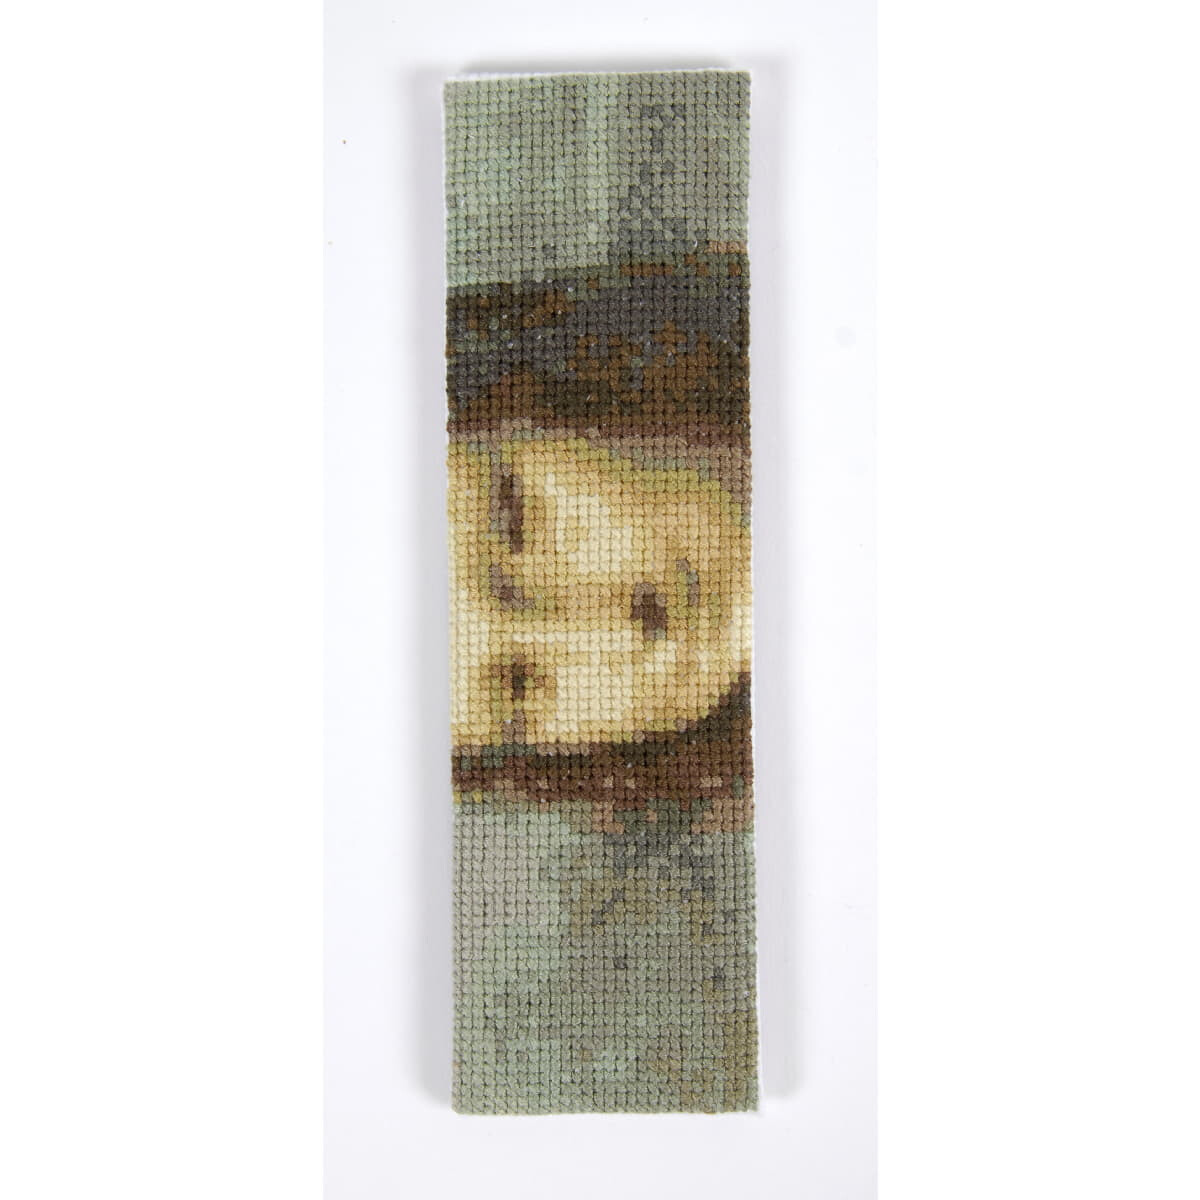 DMC bookmark counted cross stitch kit "Louvre Mona...